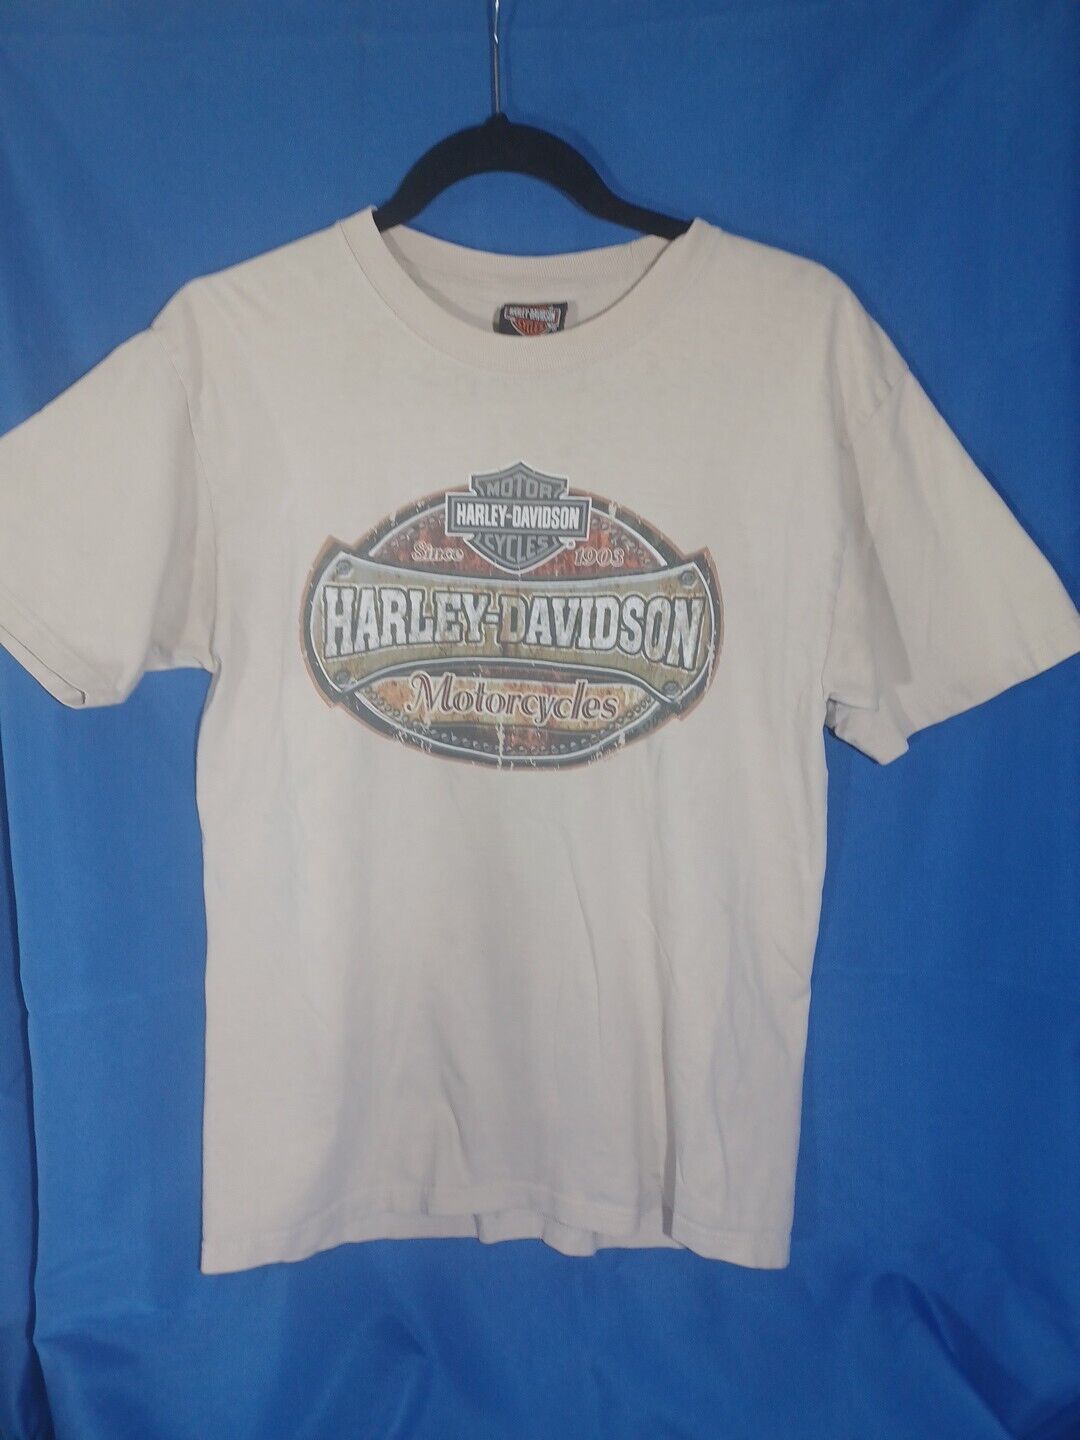  2007 Mens Harley Davidson Motorcycles Plaque T-Shirt Fresno California Medium M